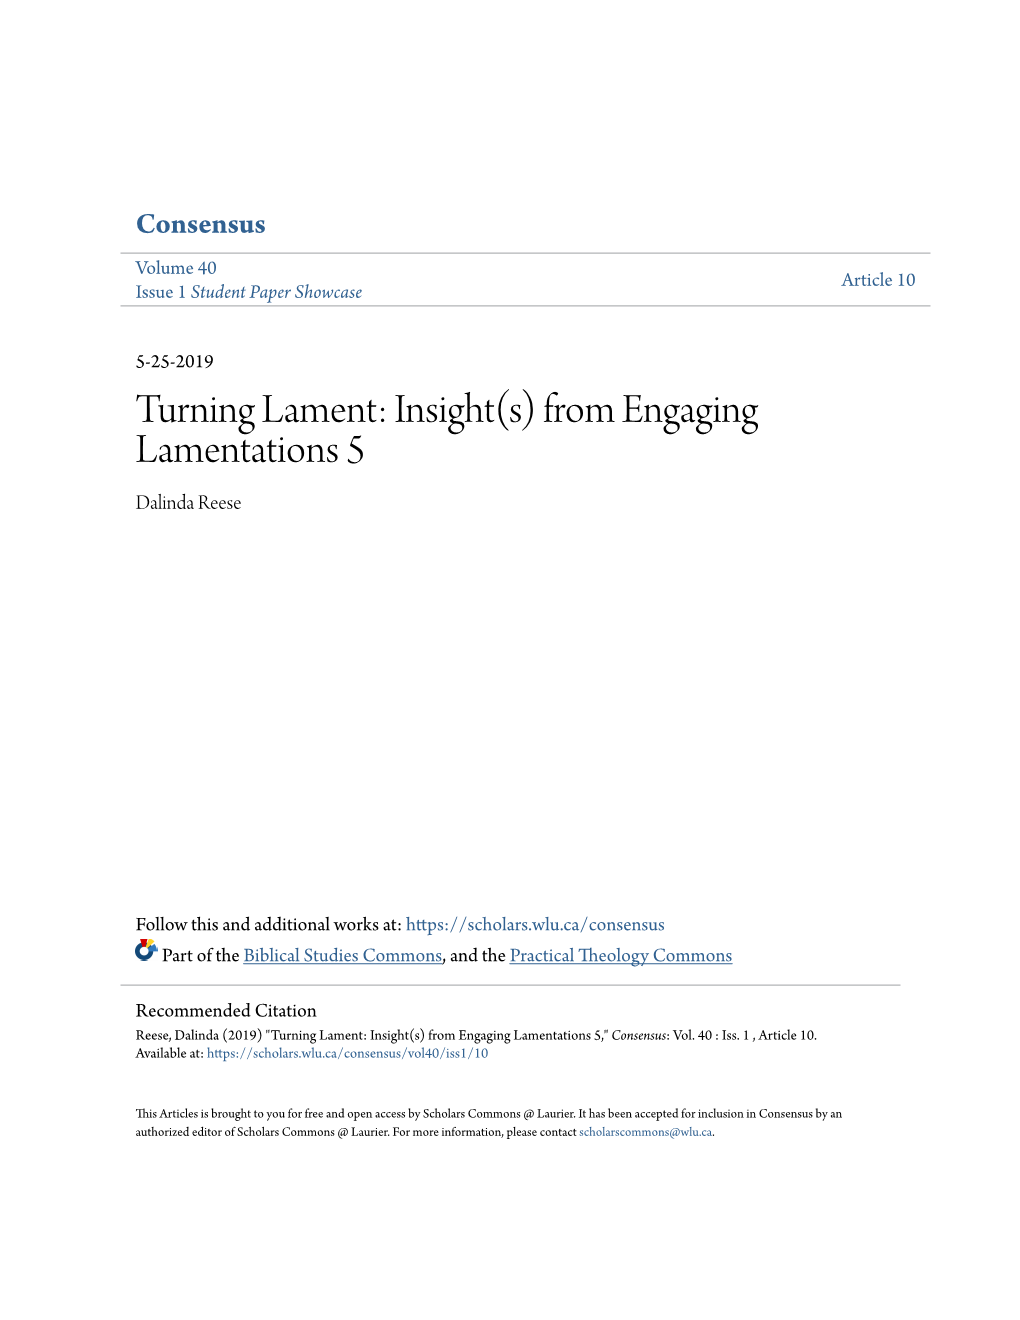 Turning Lament: Insight(S) from Engaging Lamentations 5 Dalinda Reese